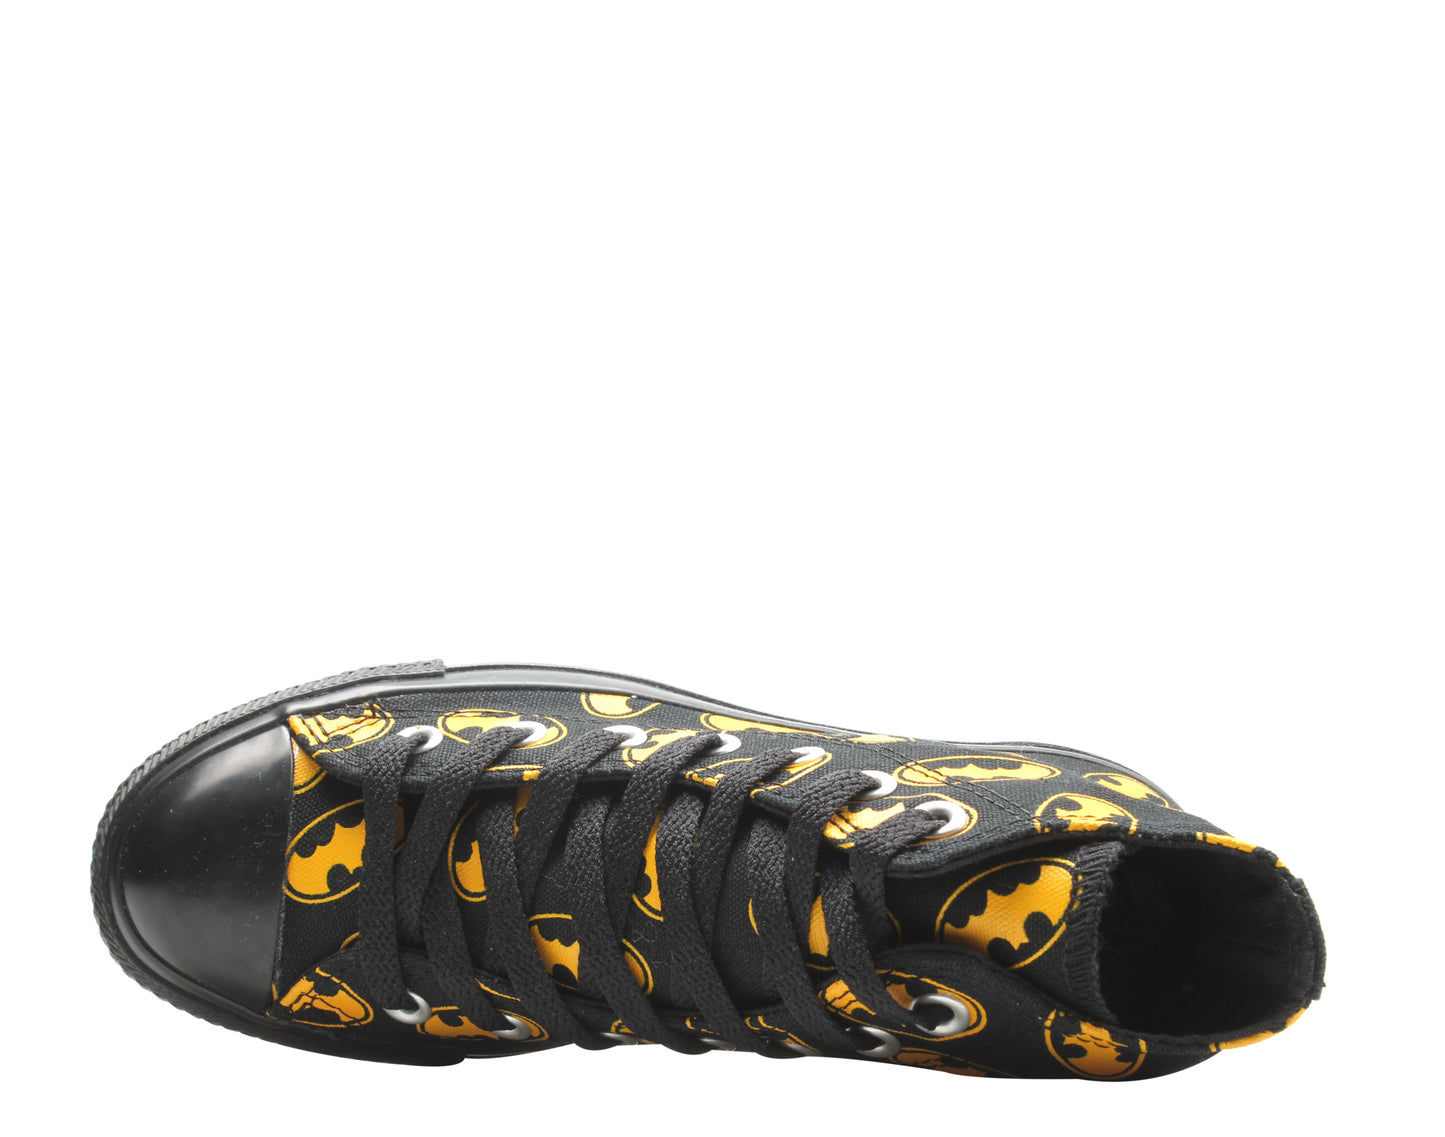 Converse Chuck Taylor All Star Print Batman Logos Black/Yellow High Top Sneaker 1U591